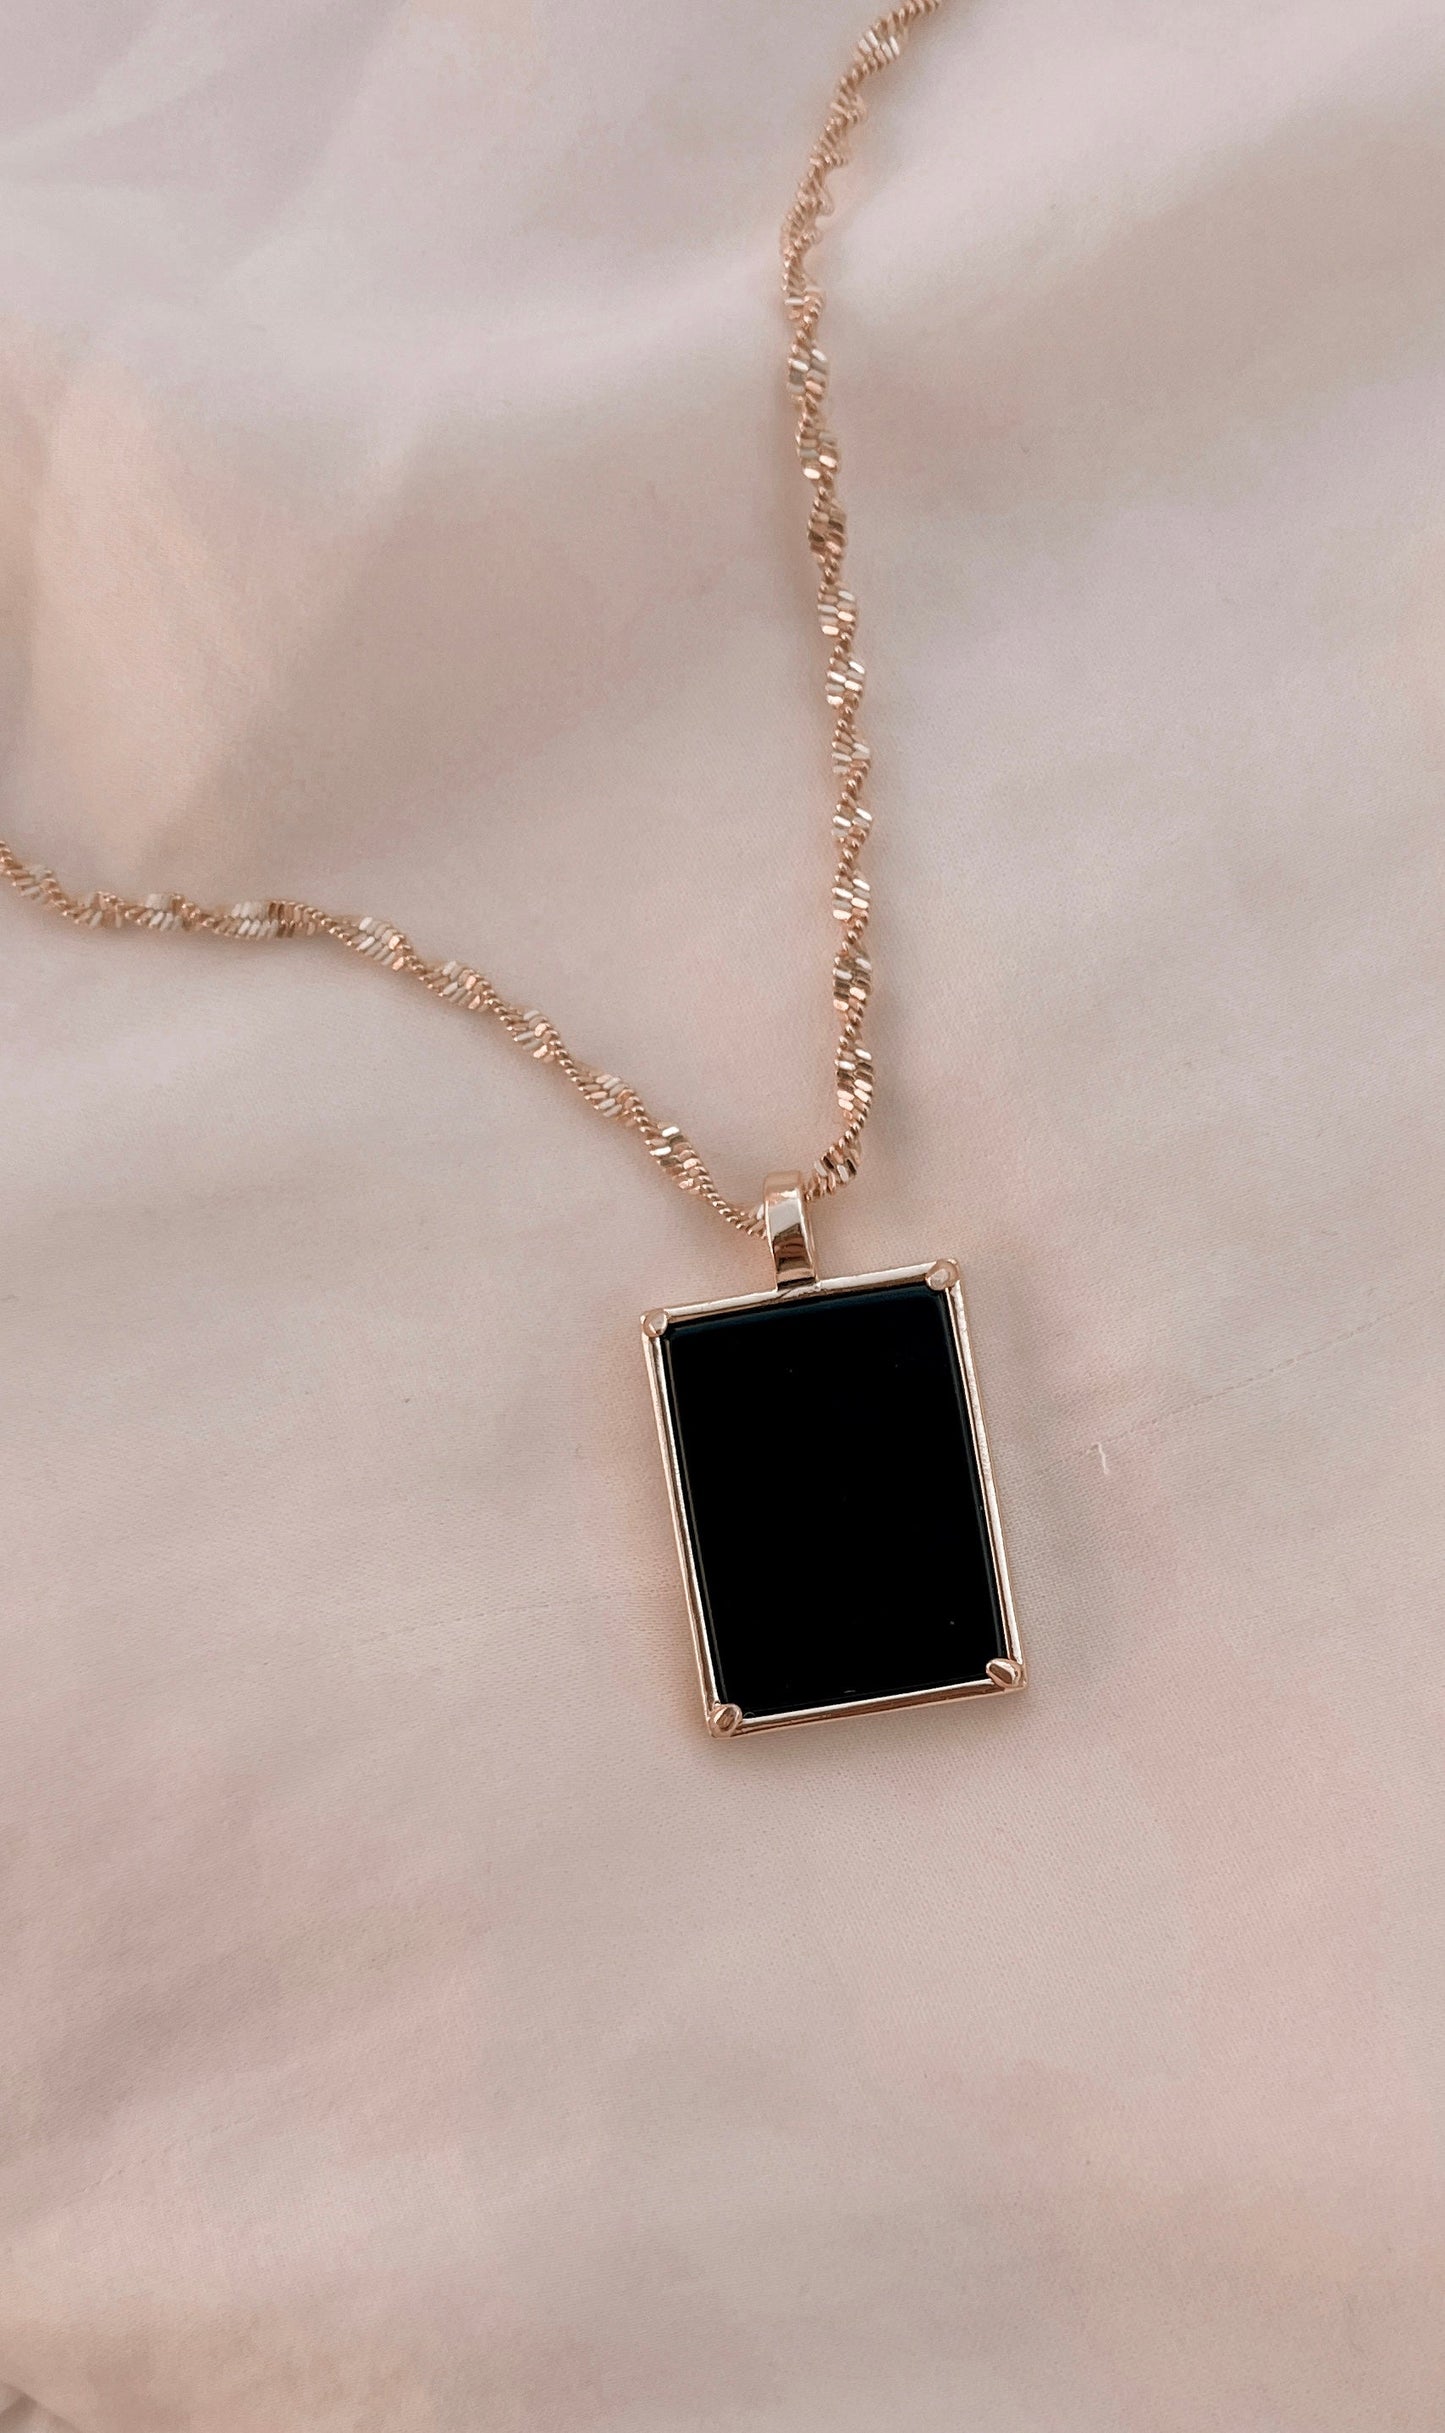 Hekate | black onyx necklace by Terra Luna Sol